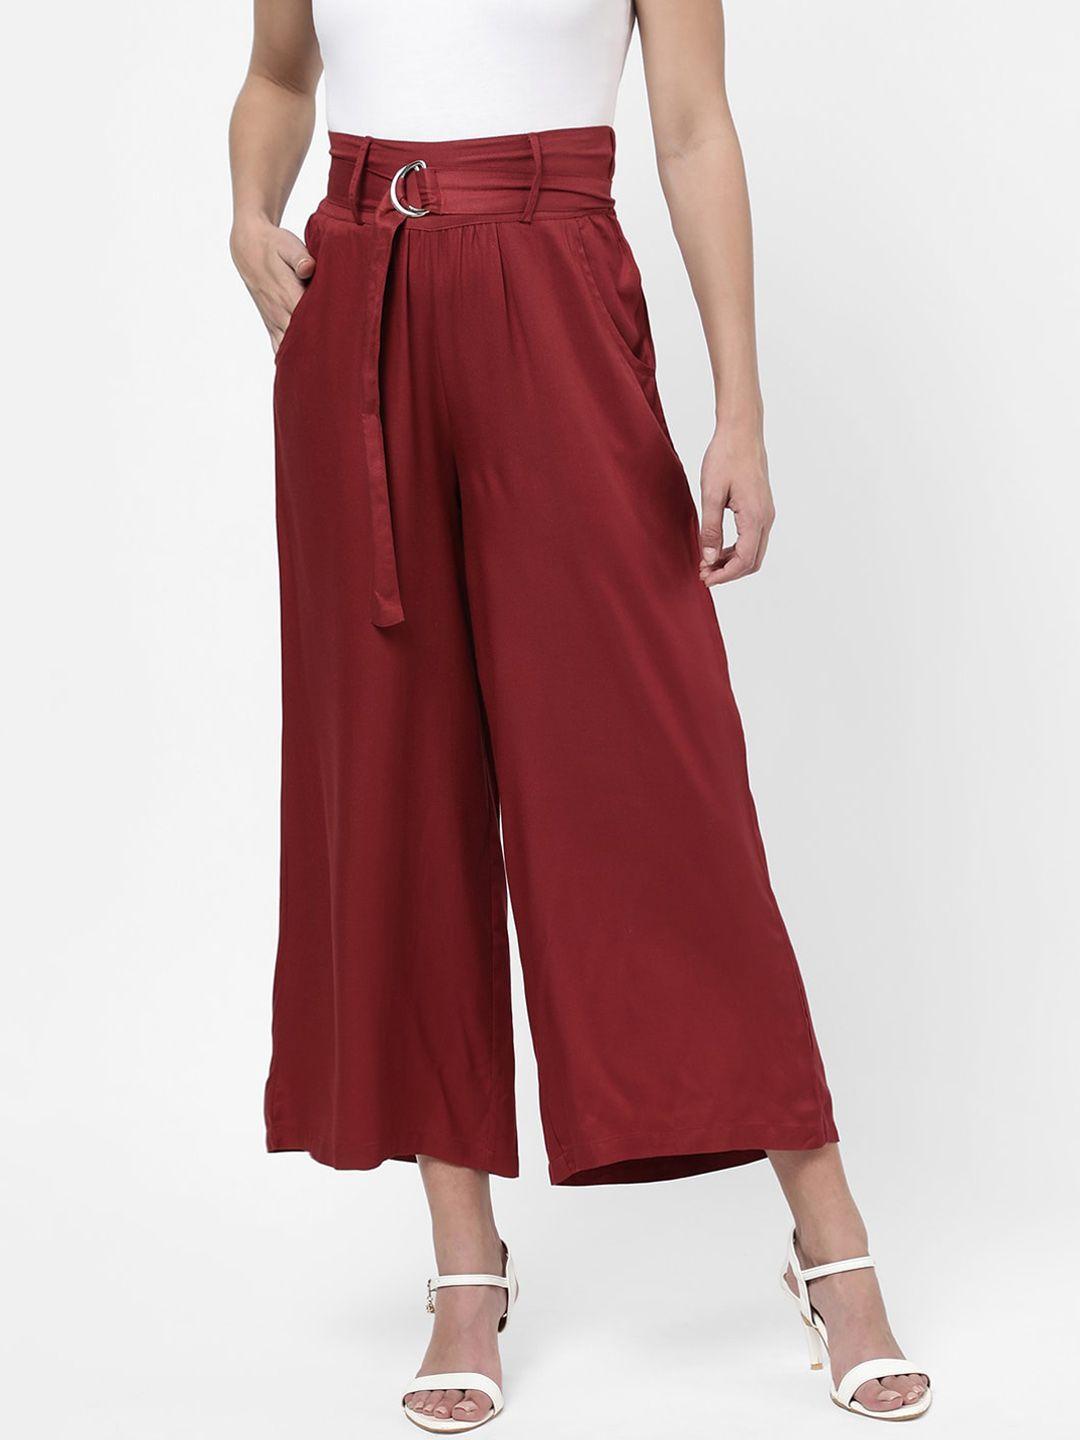 r&b women maroon pleated culottes trousers